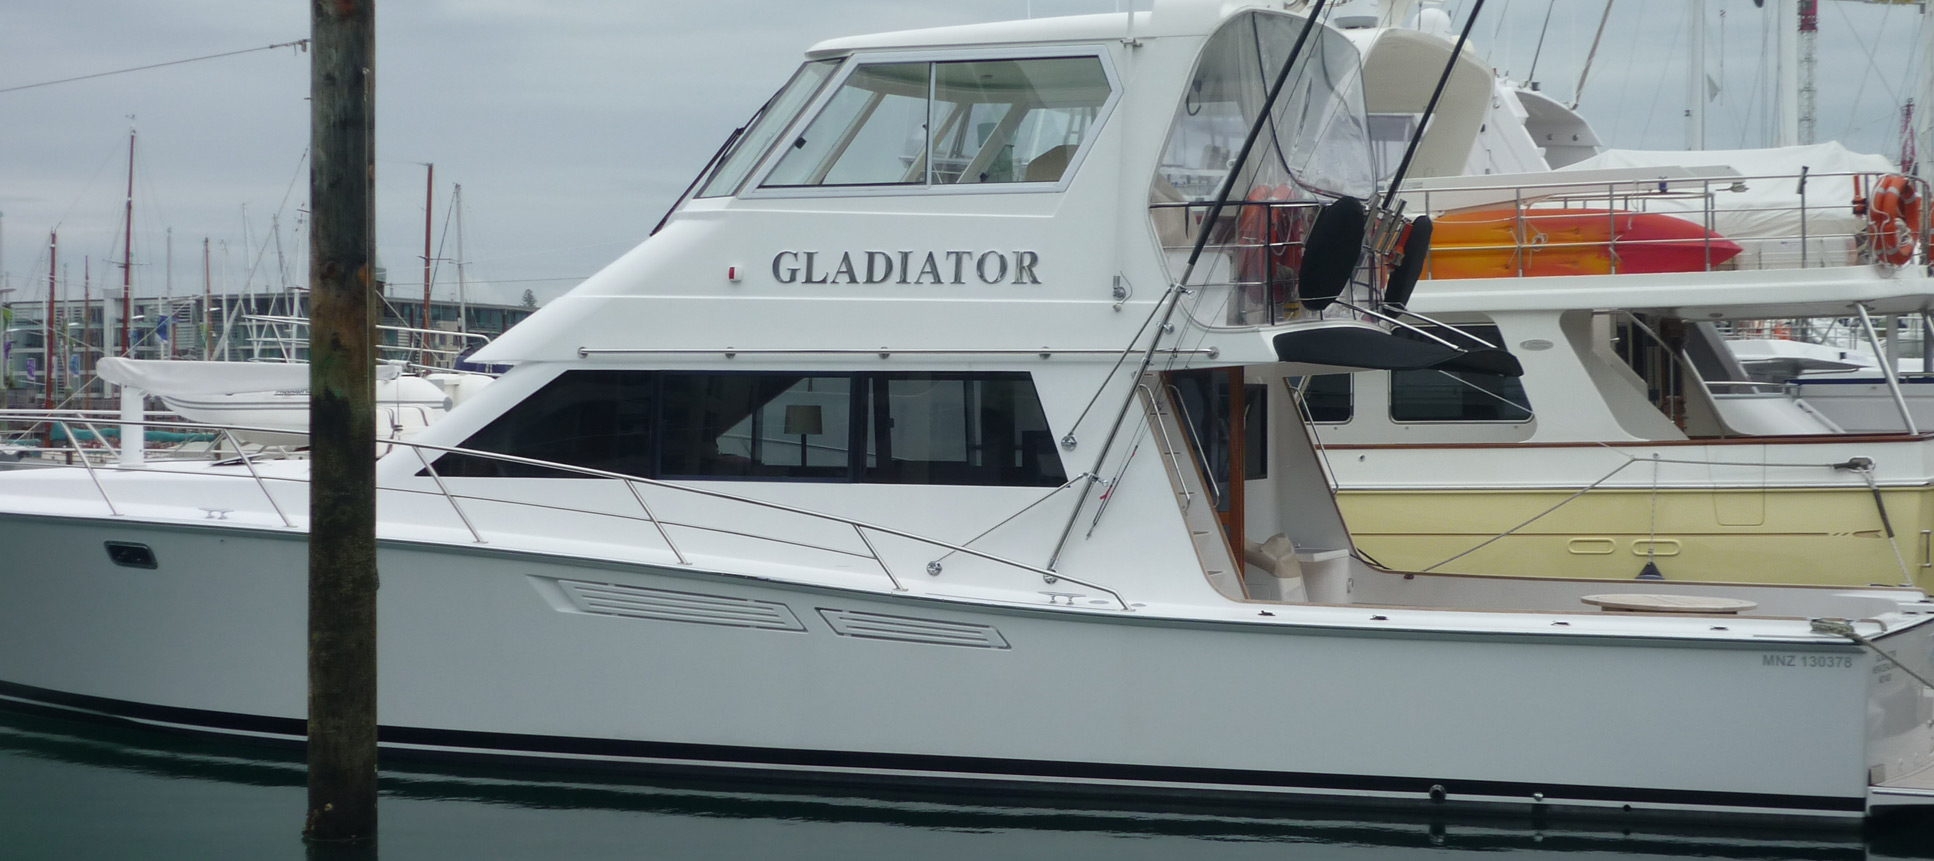 Gladiator Fishing Charter Survey